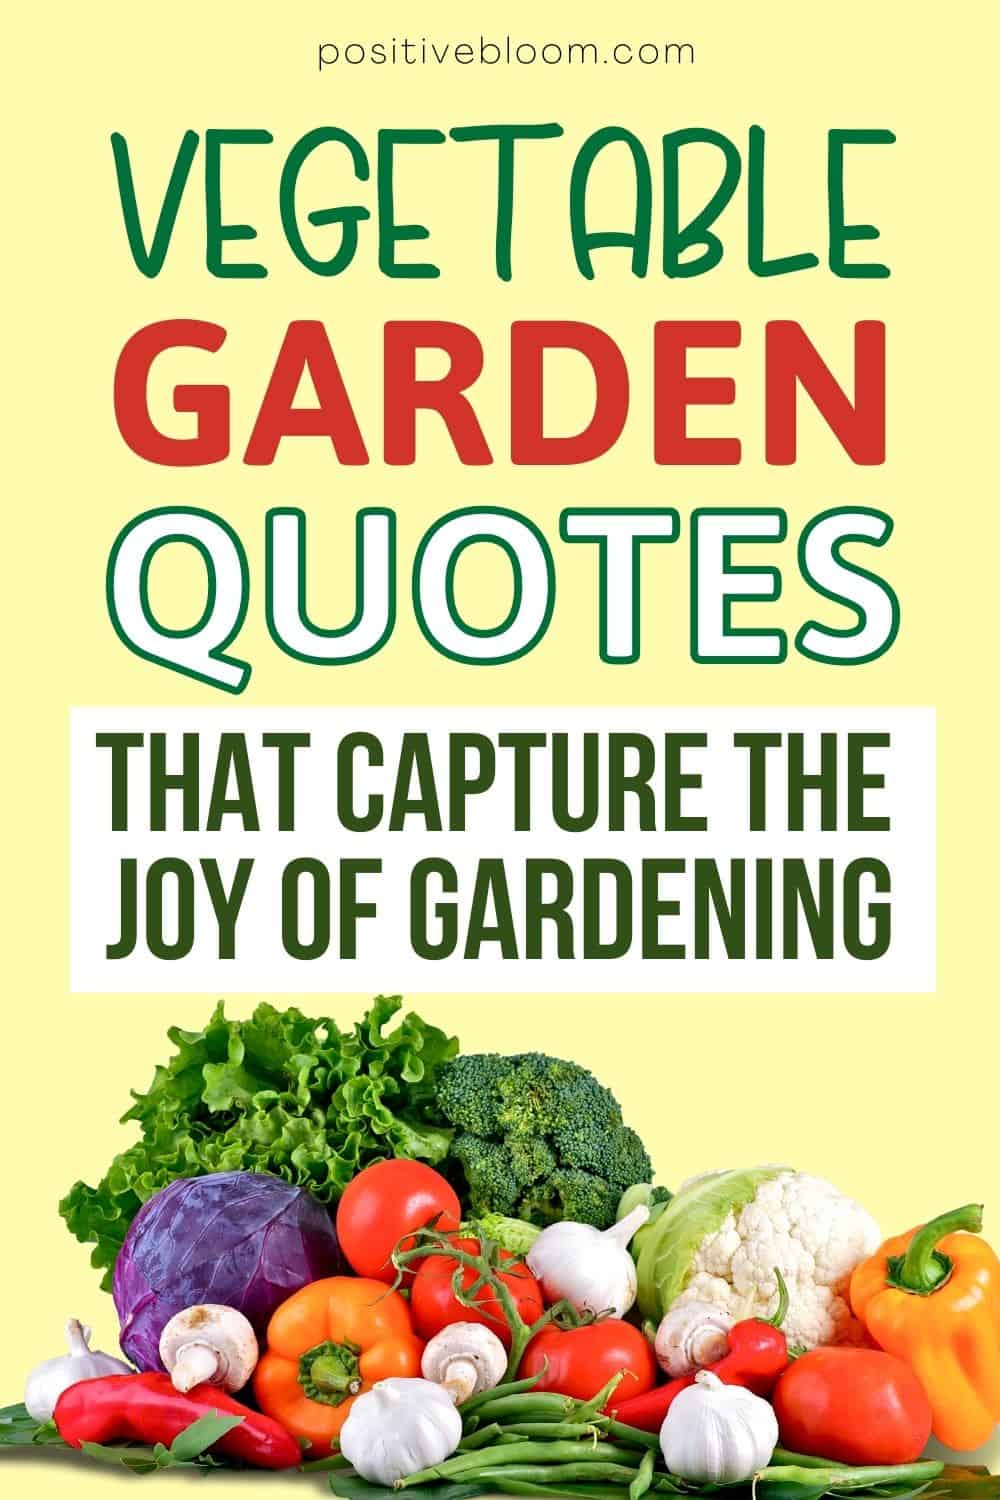 60 Vegetable Garden Quotes That Capture The Joy of Gardening (4)